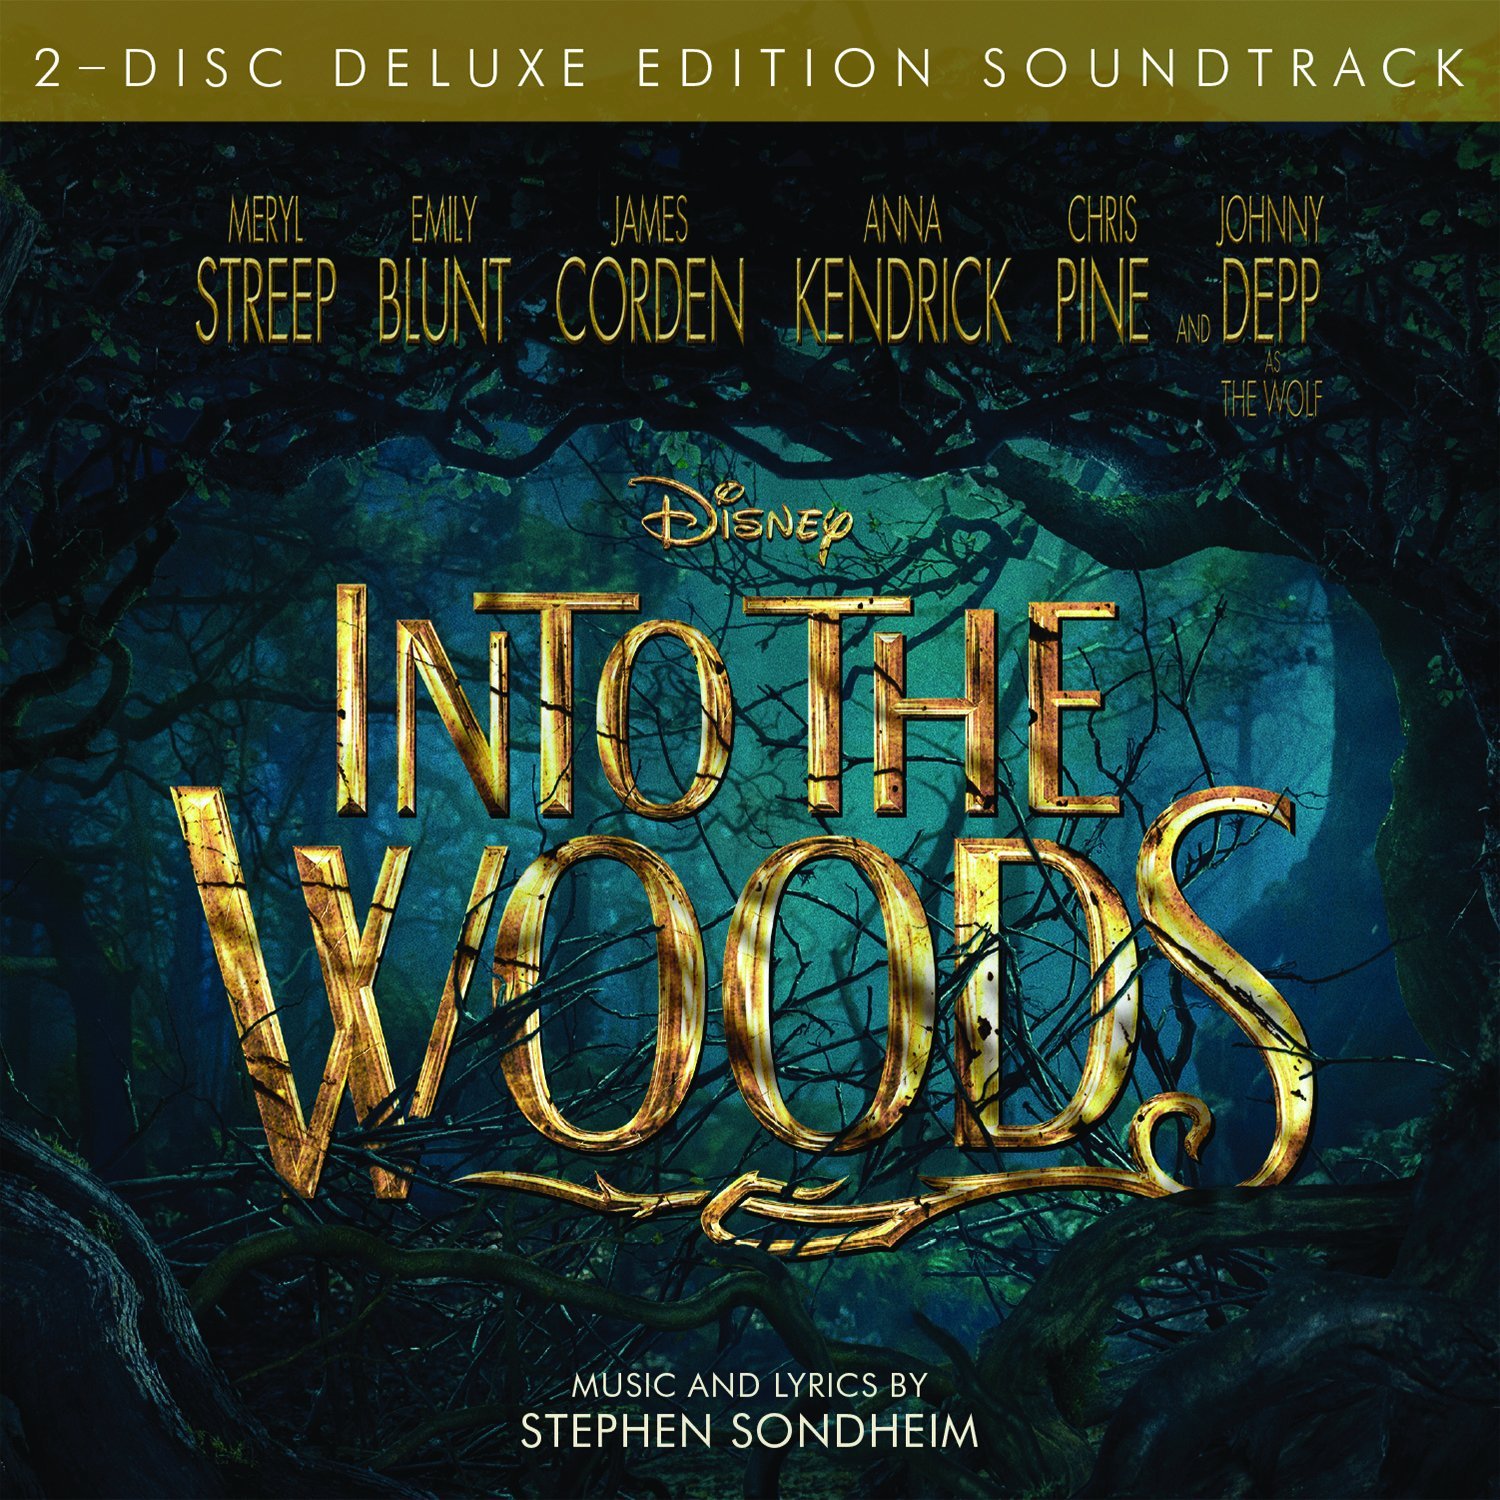 Source: http://www.amazon.com/Into-Woods-Soundtrack/dp/B00MAIK7BC